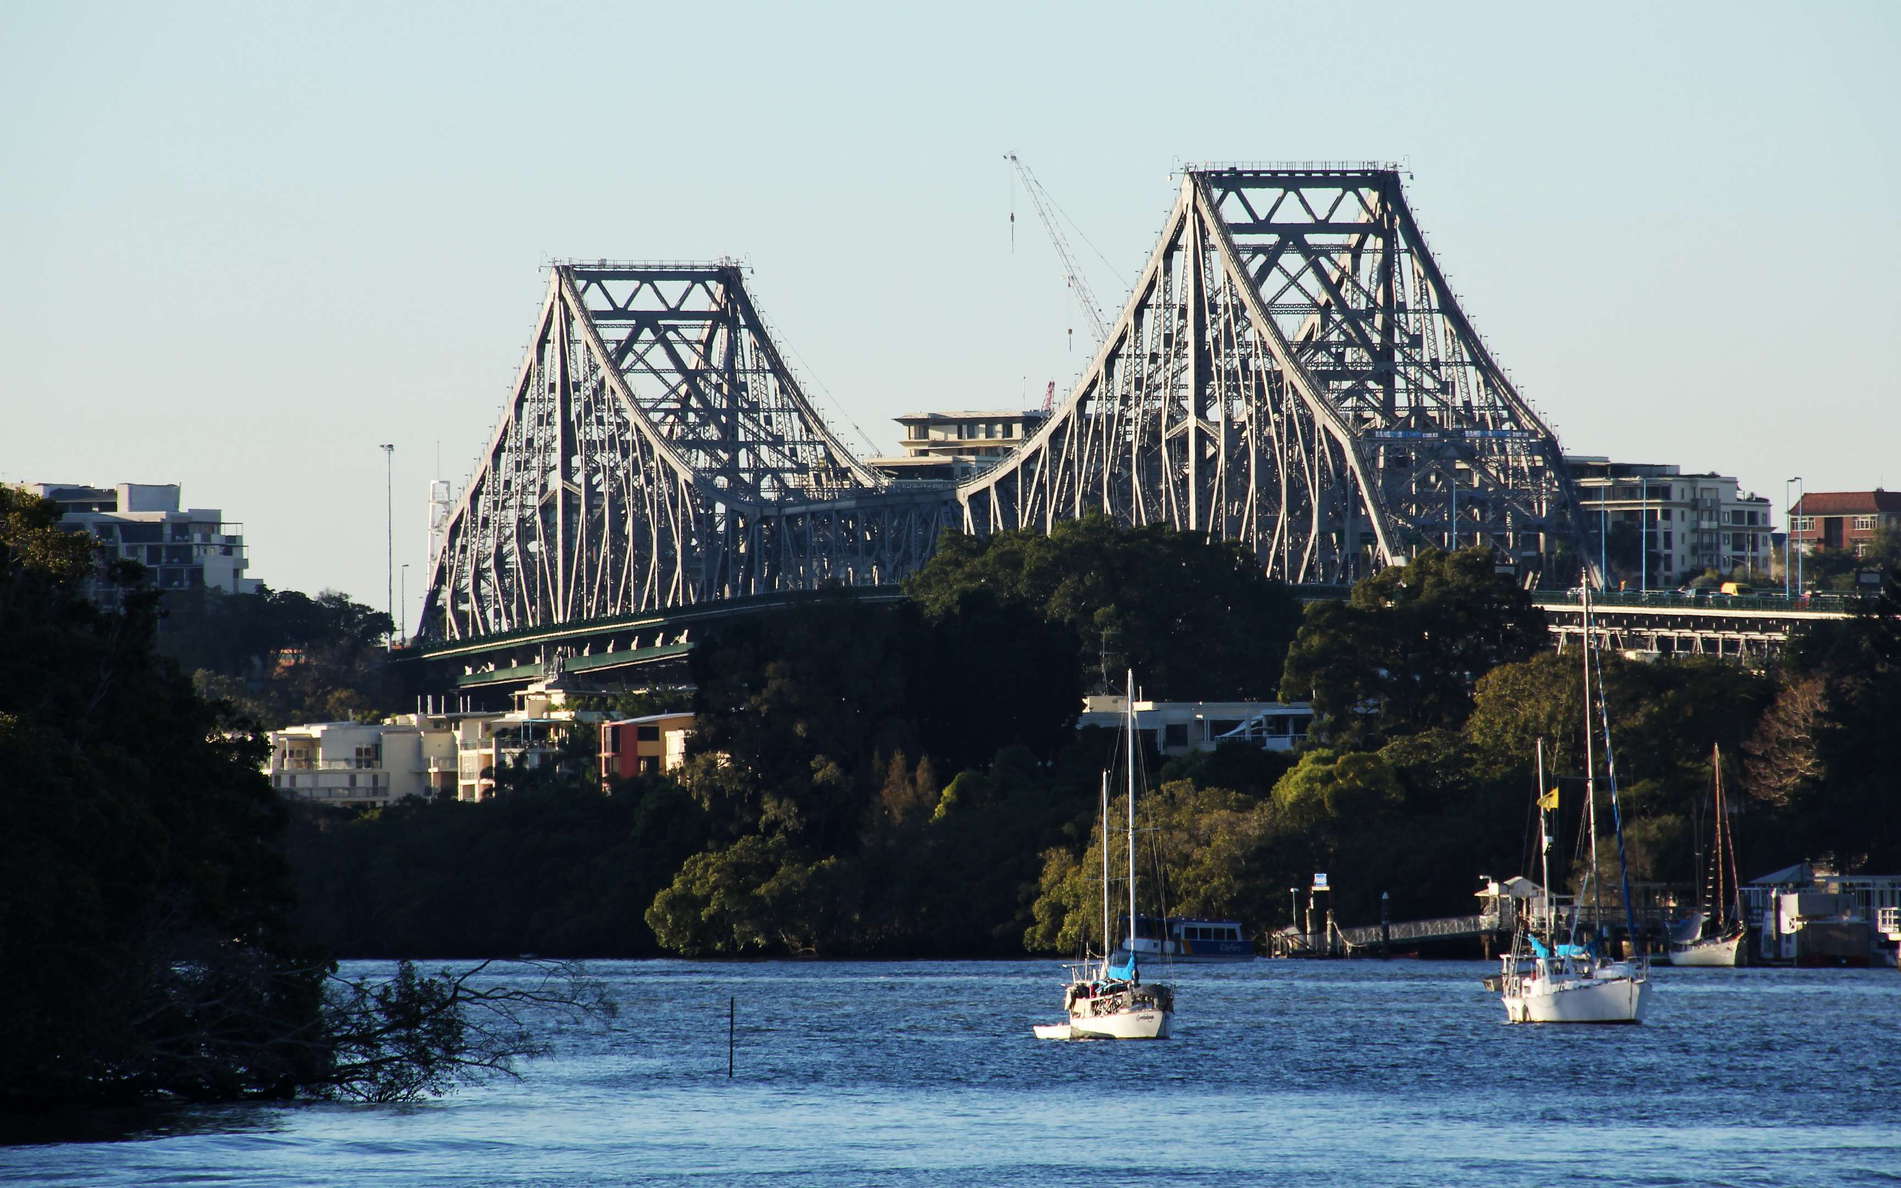 Brisbane River and Story Bridge